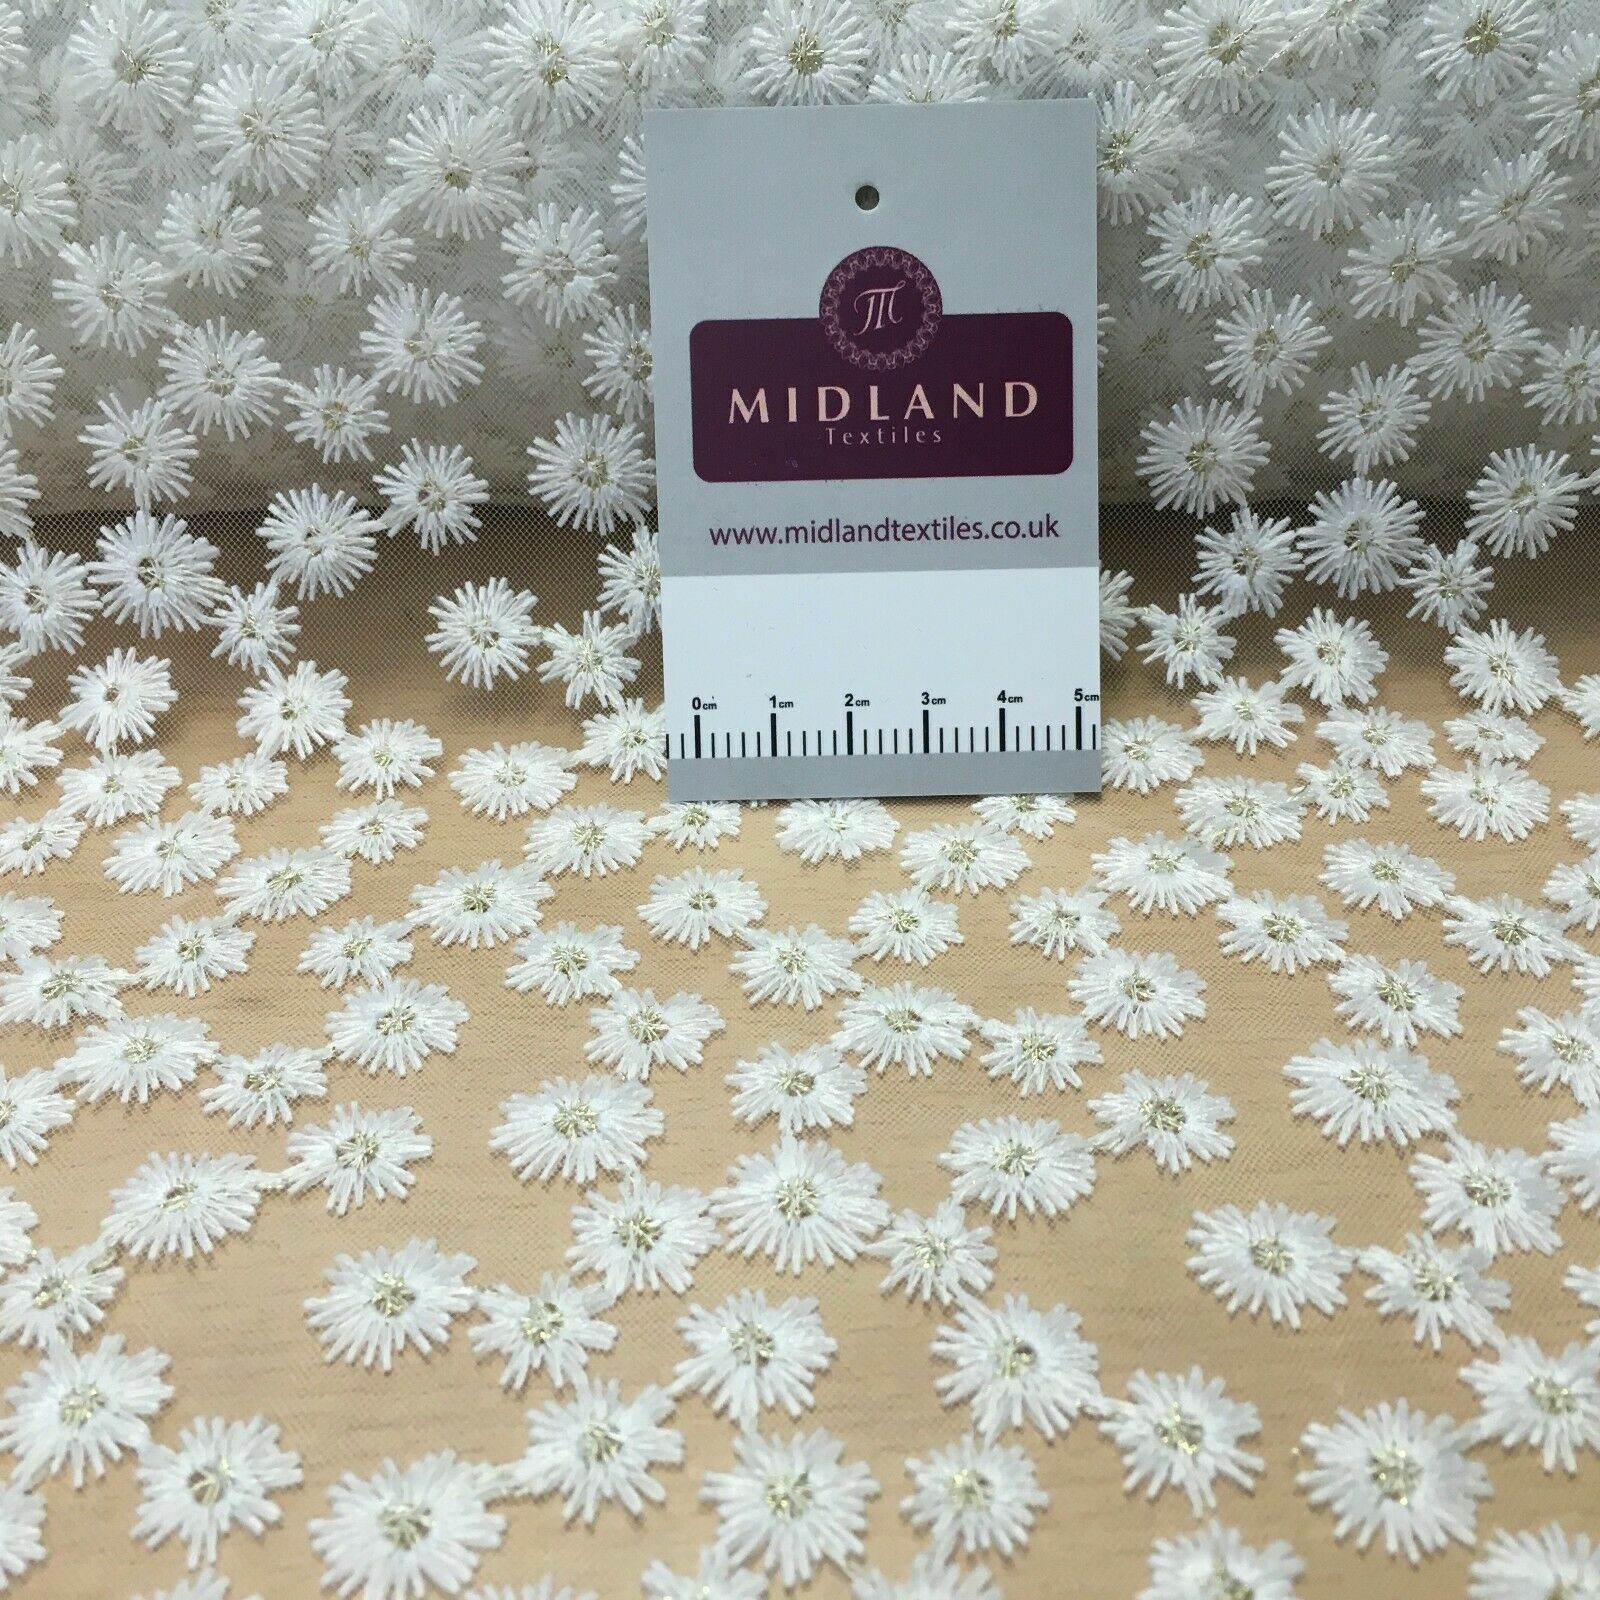 Ivory daisy Bridal Floral Elegant embroidered Net dress fabric M1440 Mtex